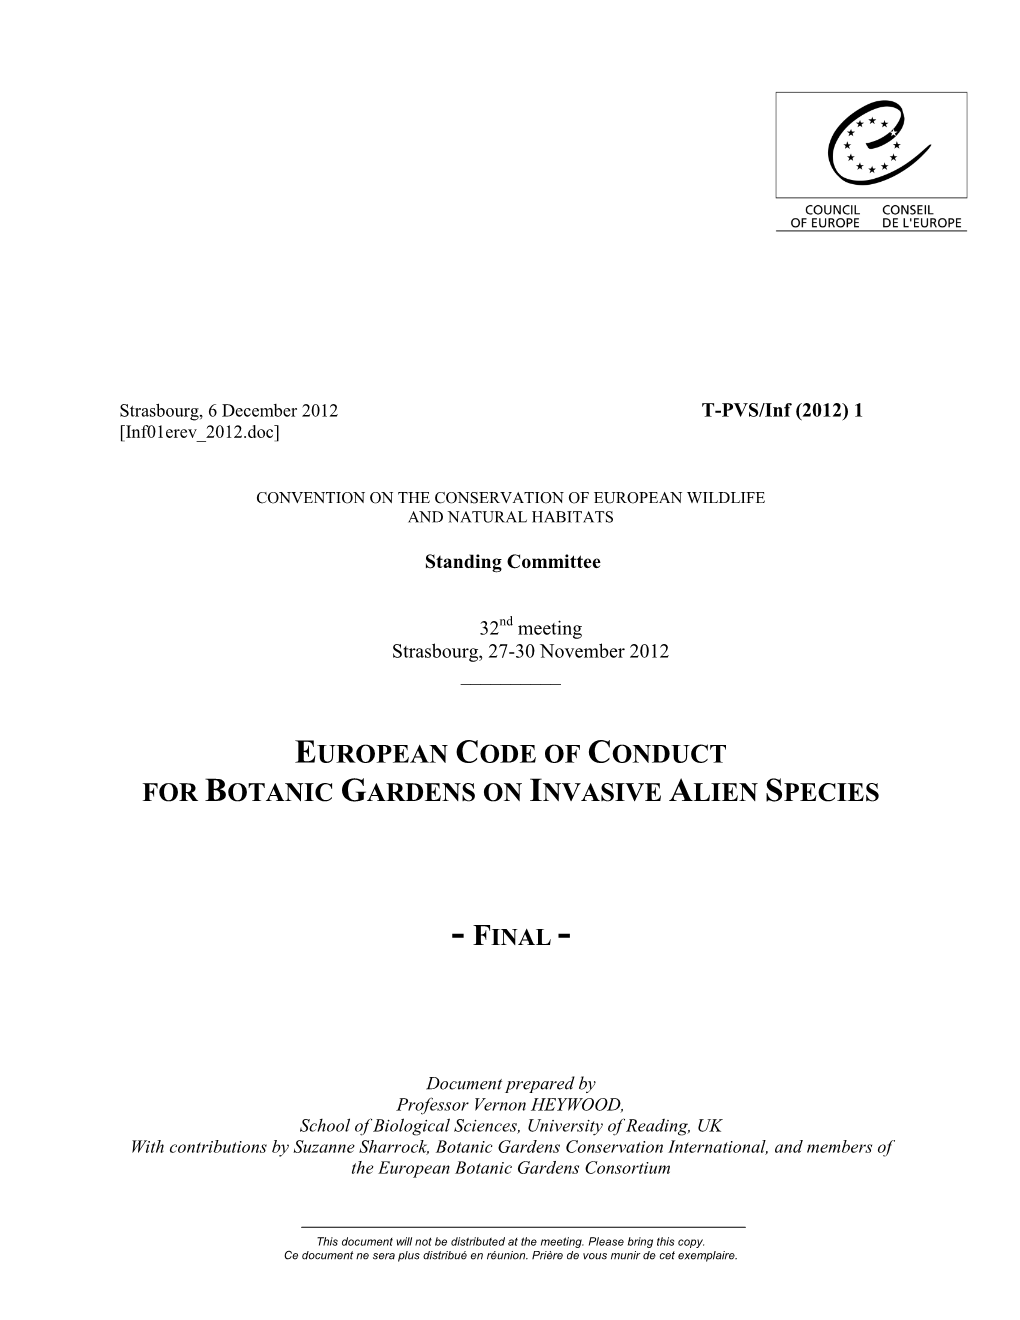 European Code of Conduct for Botanic Gardens on Invasive Alien Species